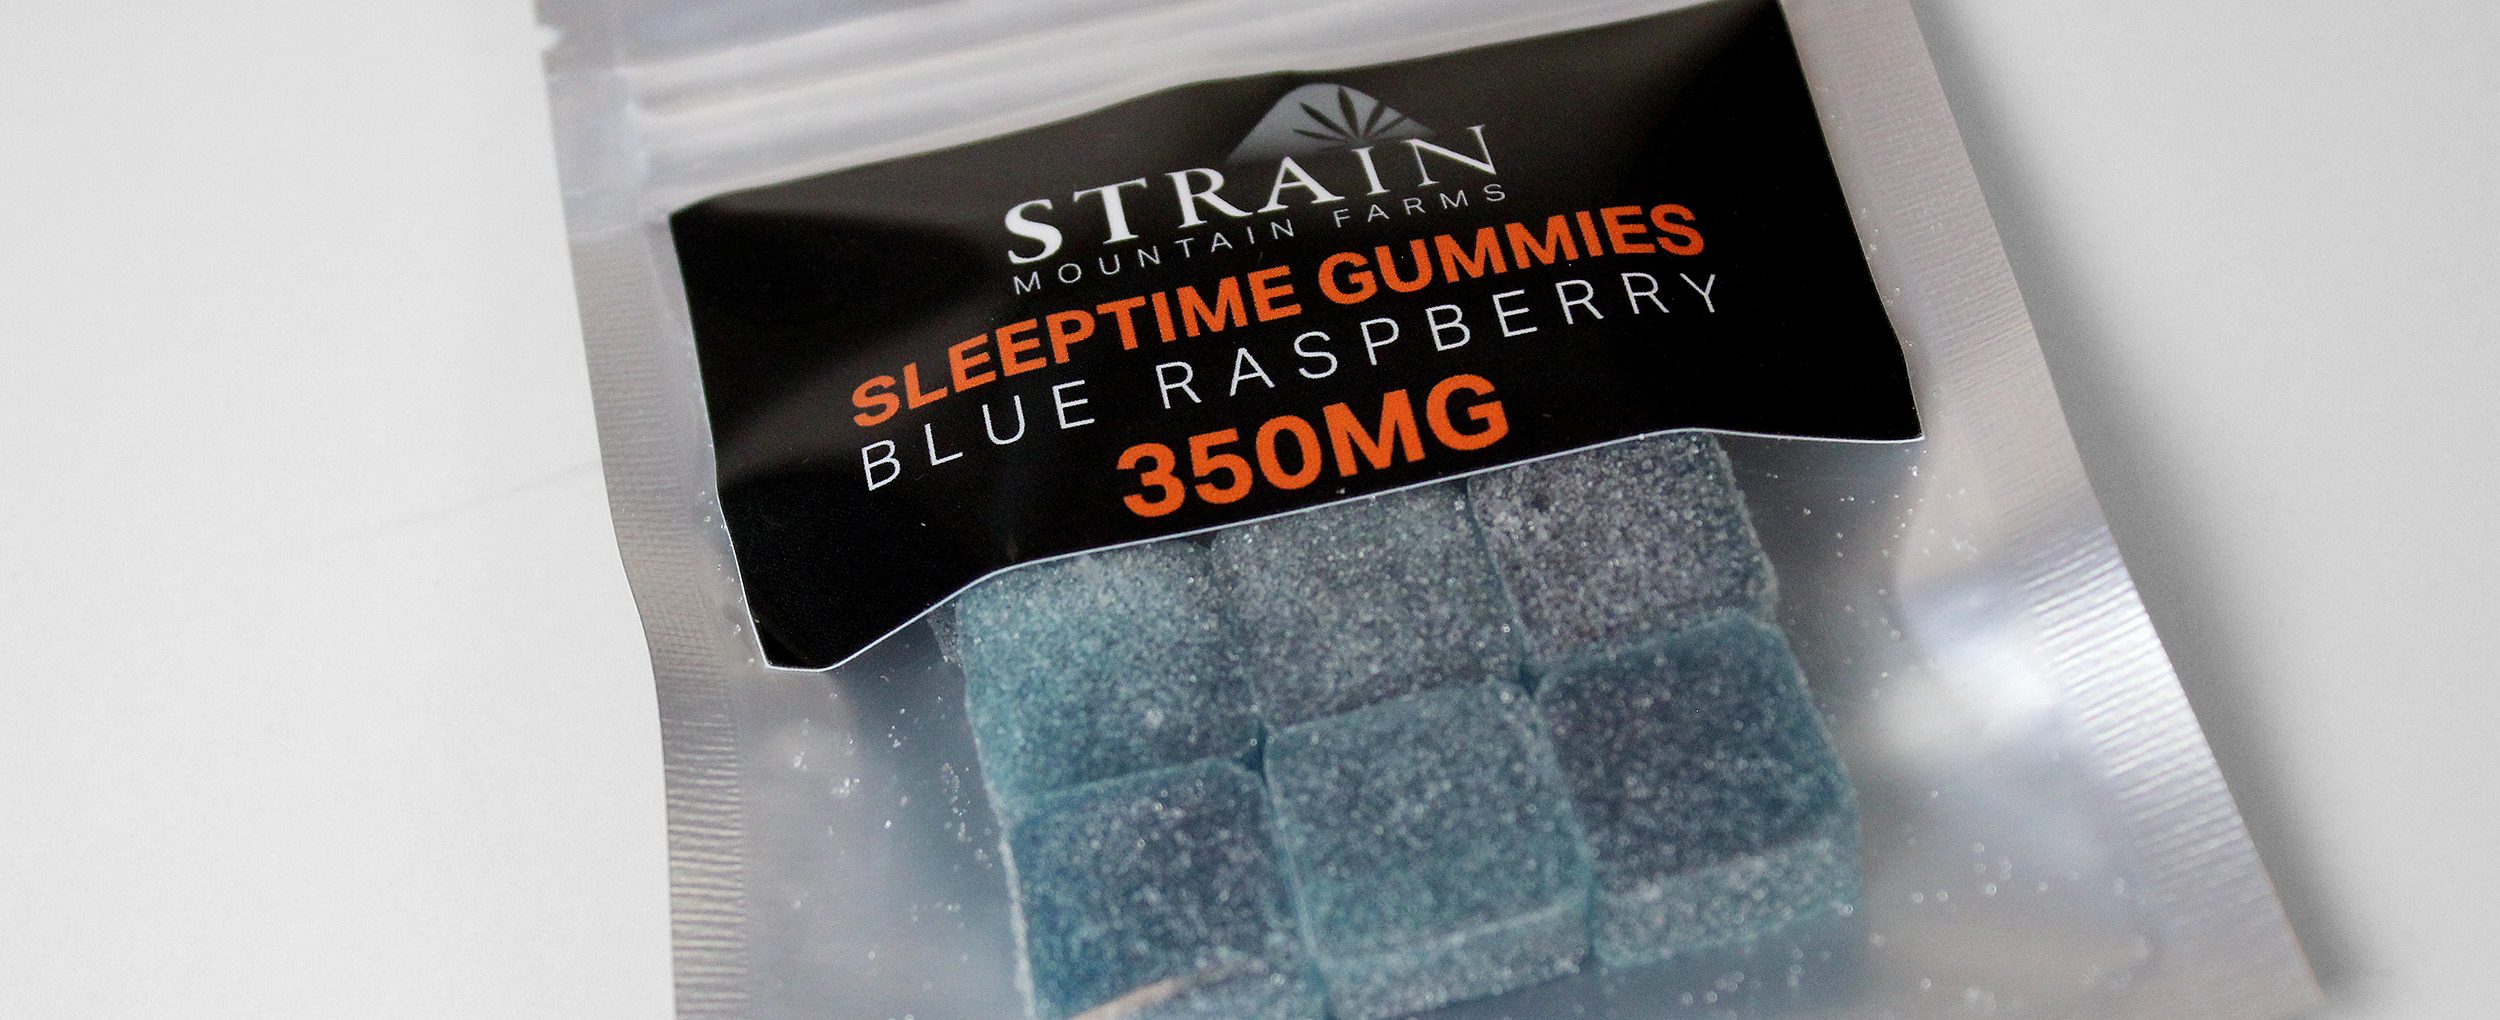 Strain Mountian Sleeptime Gummies Package 3